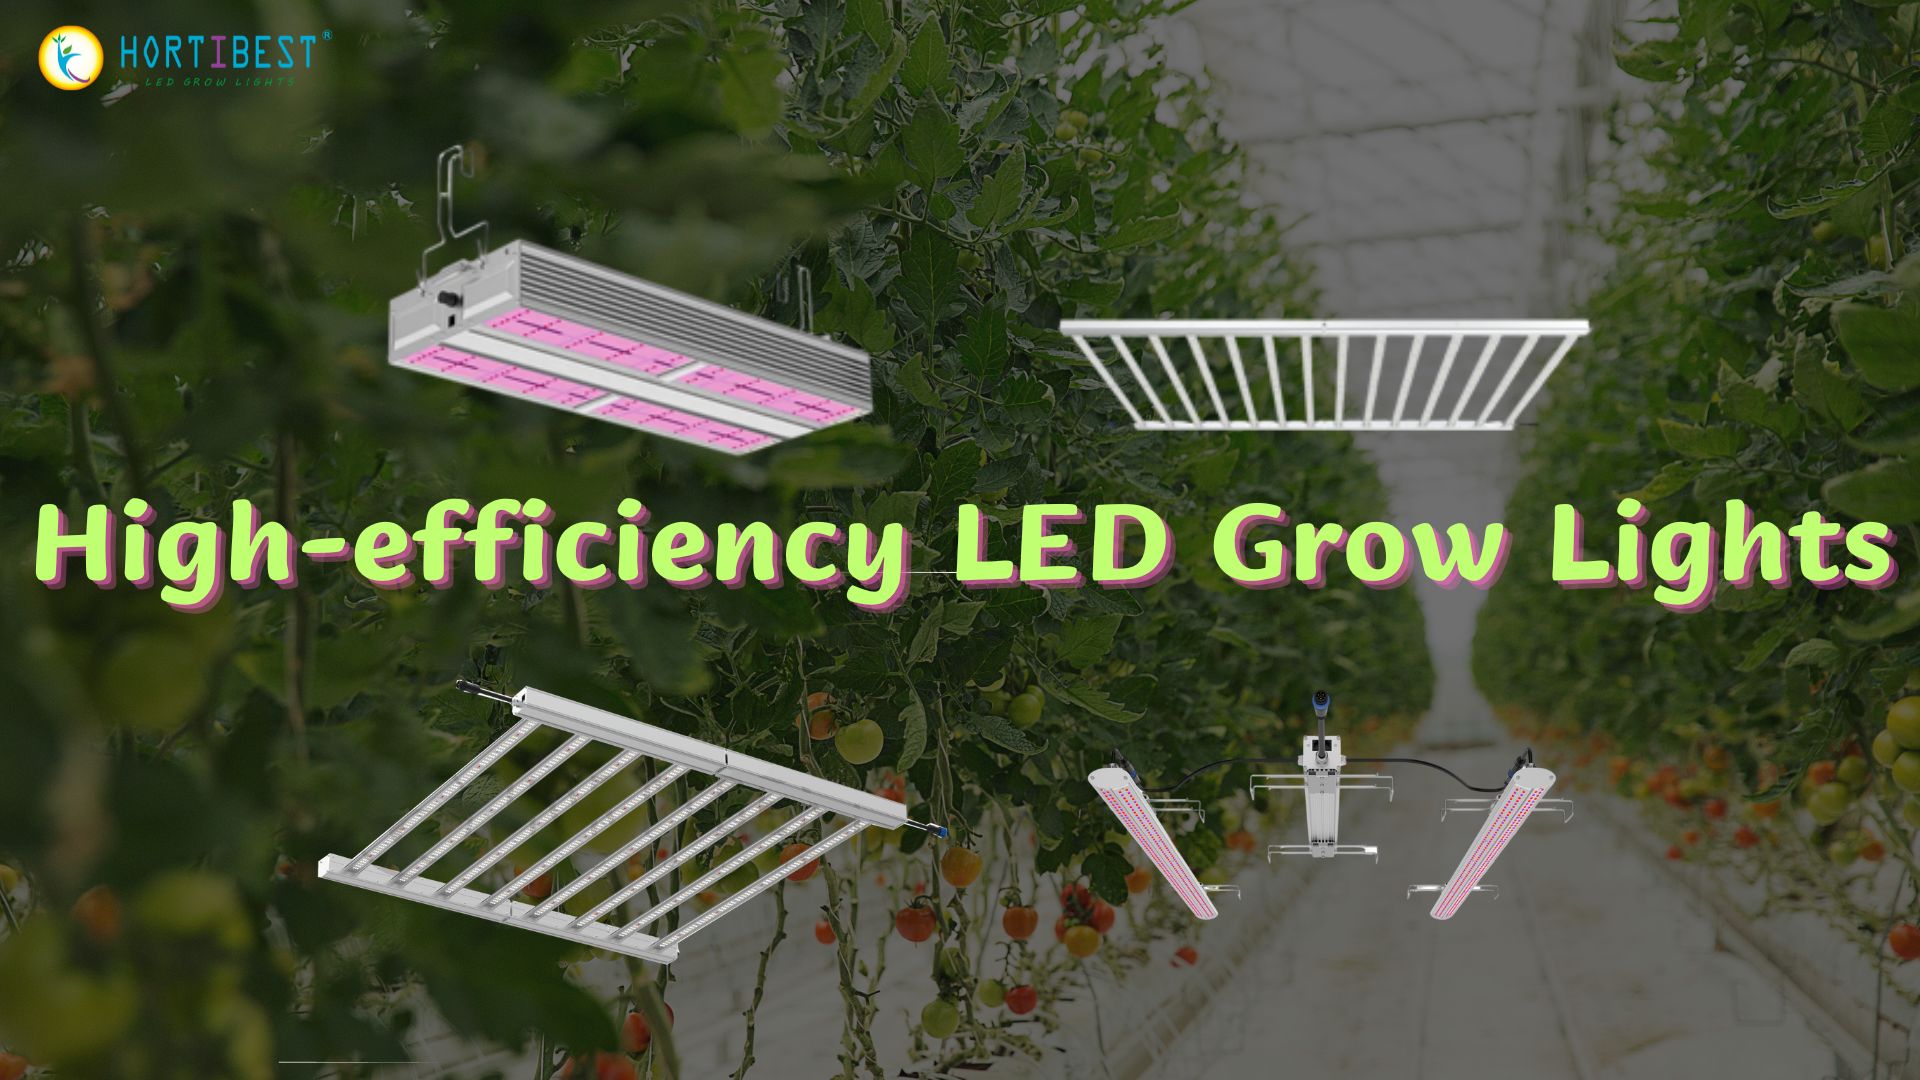 High-efficiency LED Grow Lights for Indoor Gardening